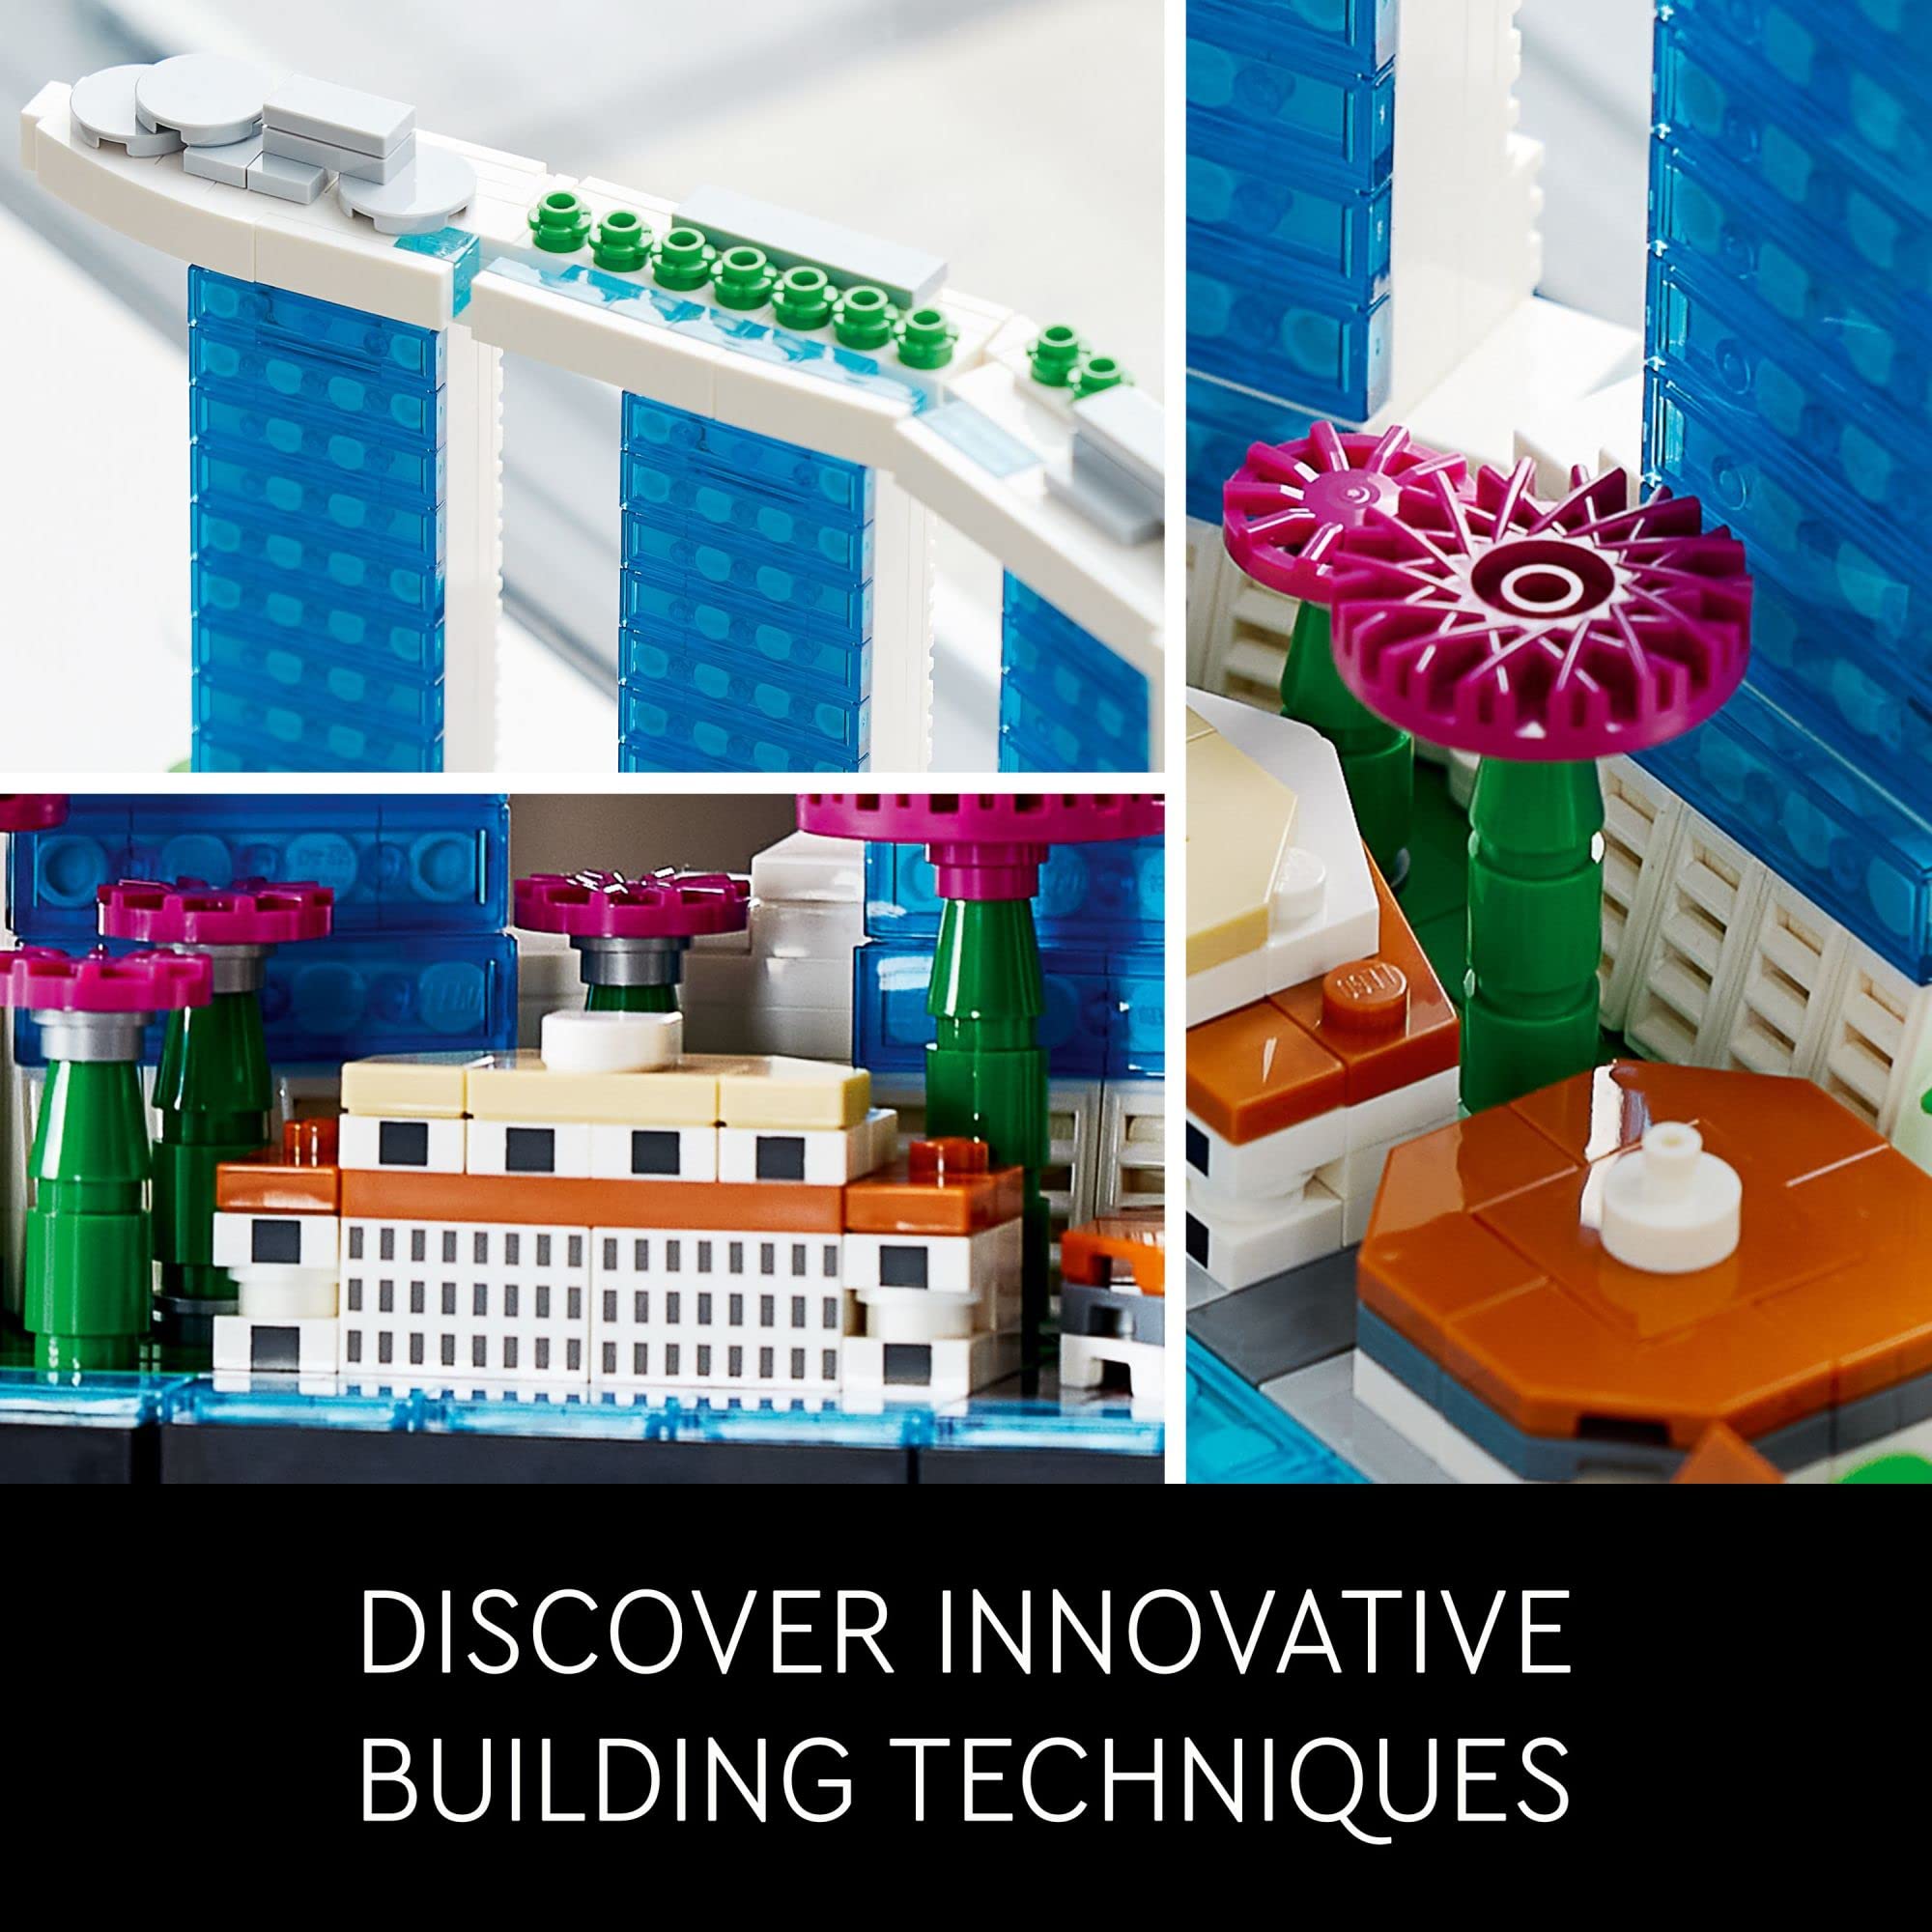 LEGO Architecture Singapore 21057 Building Set for Adults (827 Pieces)